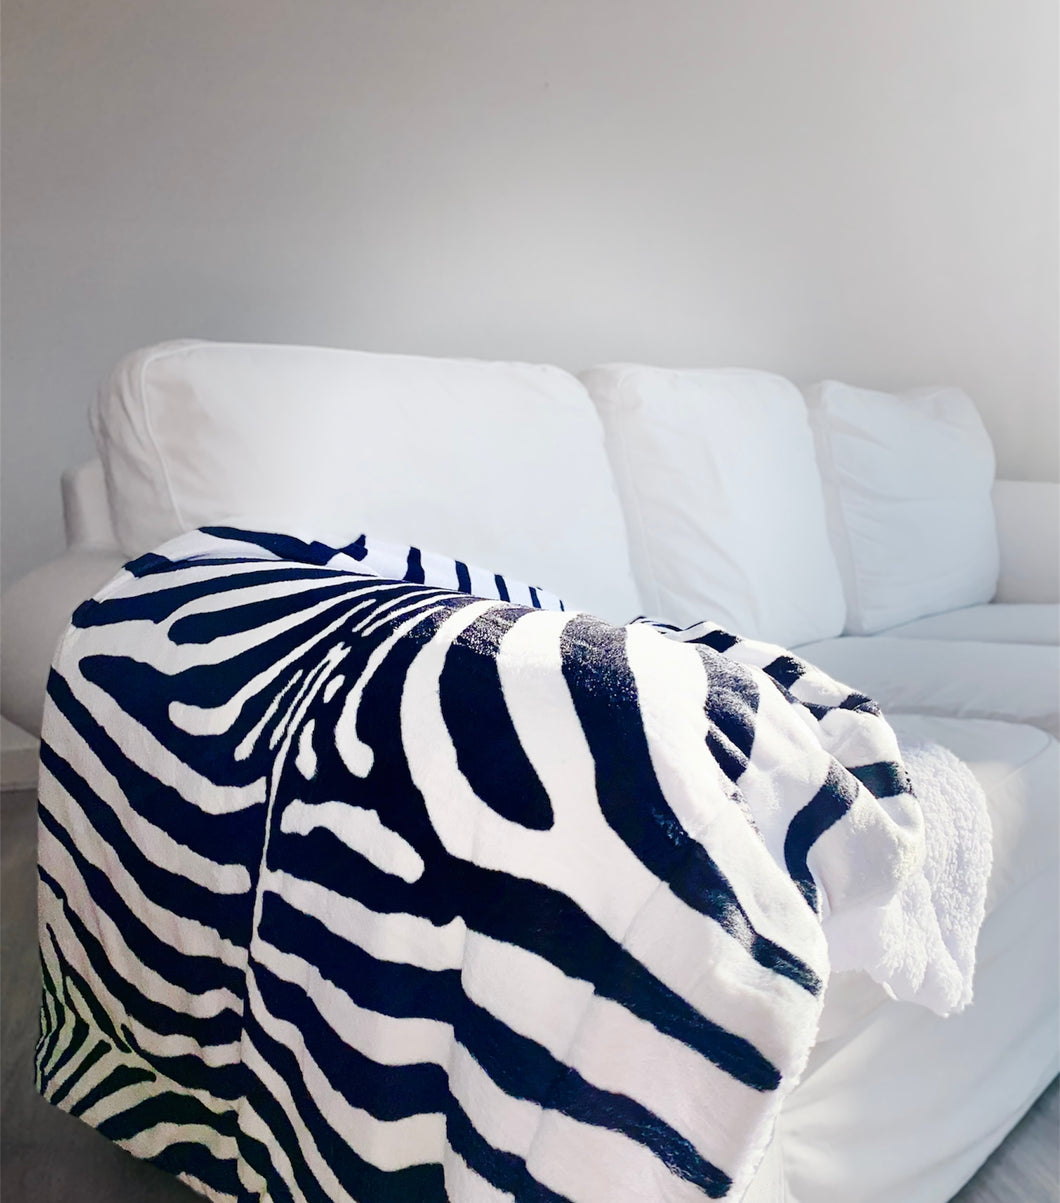 Zebra Sherpa Blanket SKU 57900543 | Throw Black and White Animal Print Warm